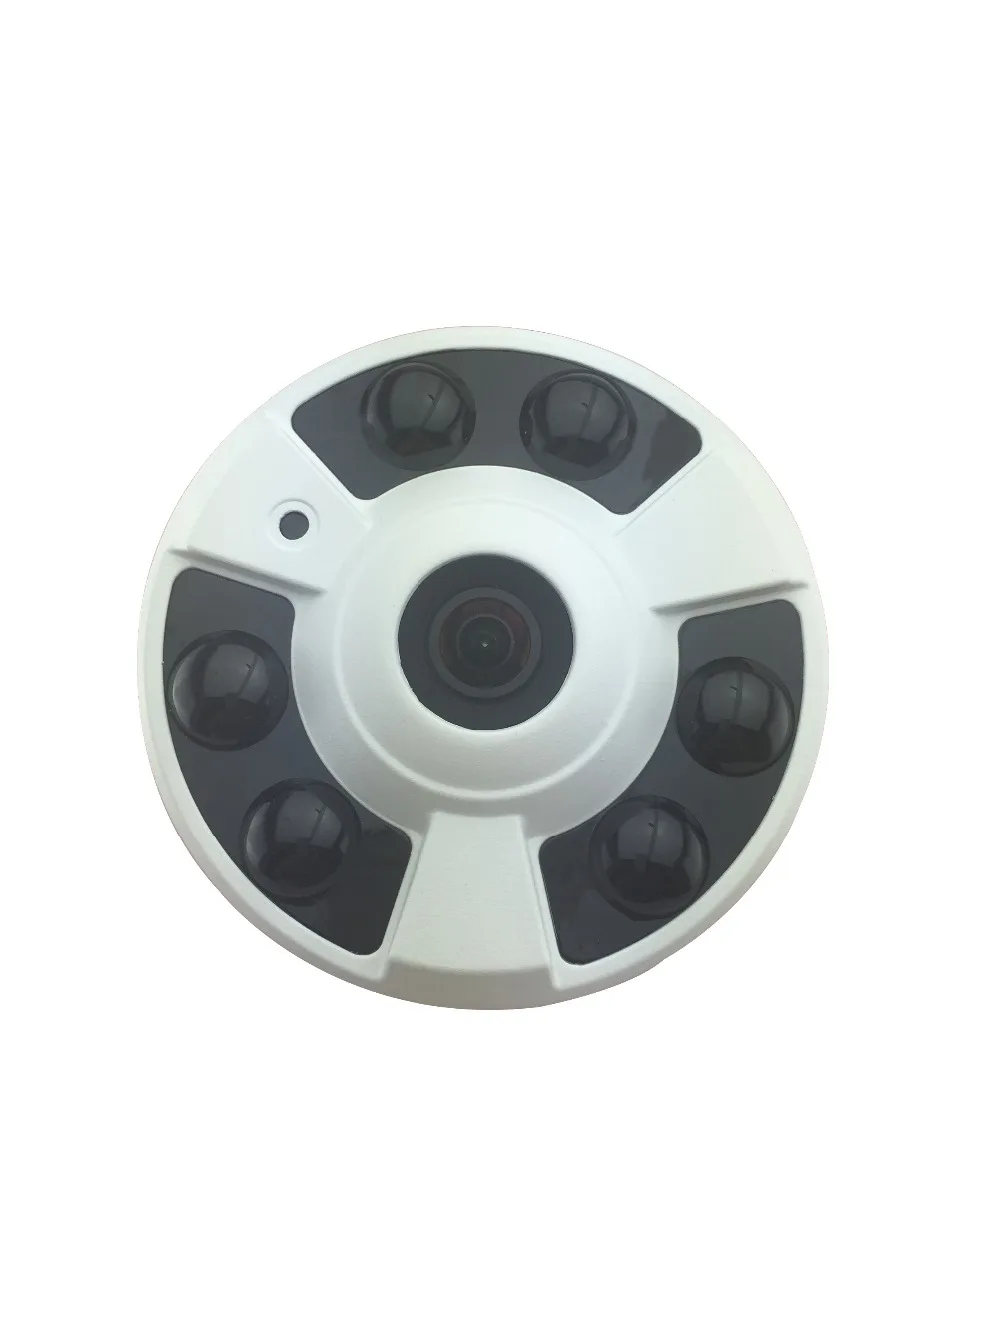 ФОТО POE Audio HD 720P 1.0MP wide-angle lens night vision lights Interior 6IR P2P onvif security IP camera